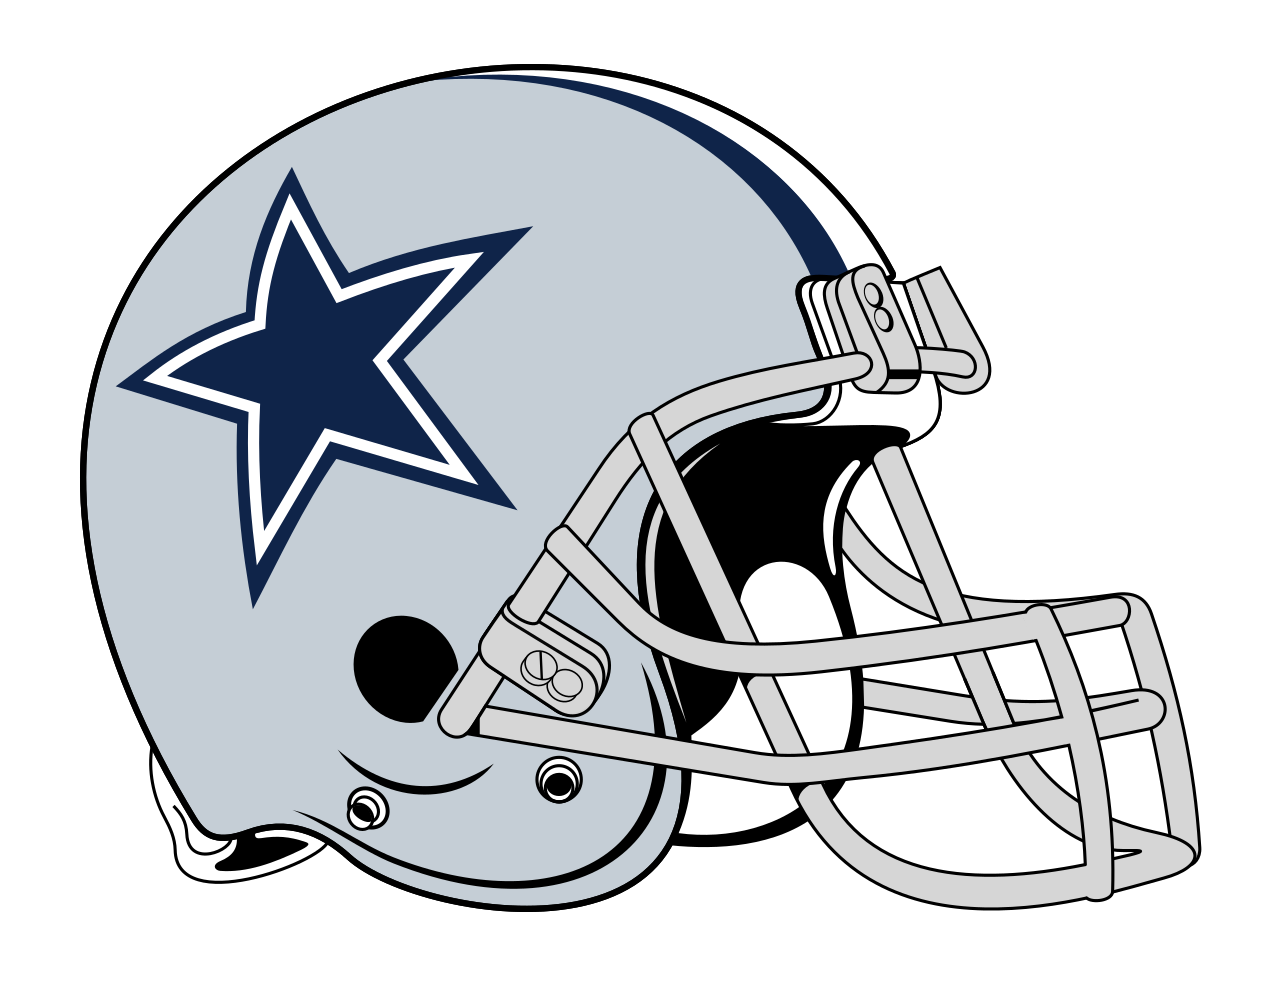 Dallas Cowboys Helmet Background PNG Image